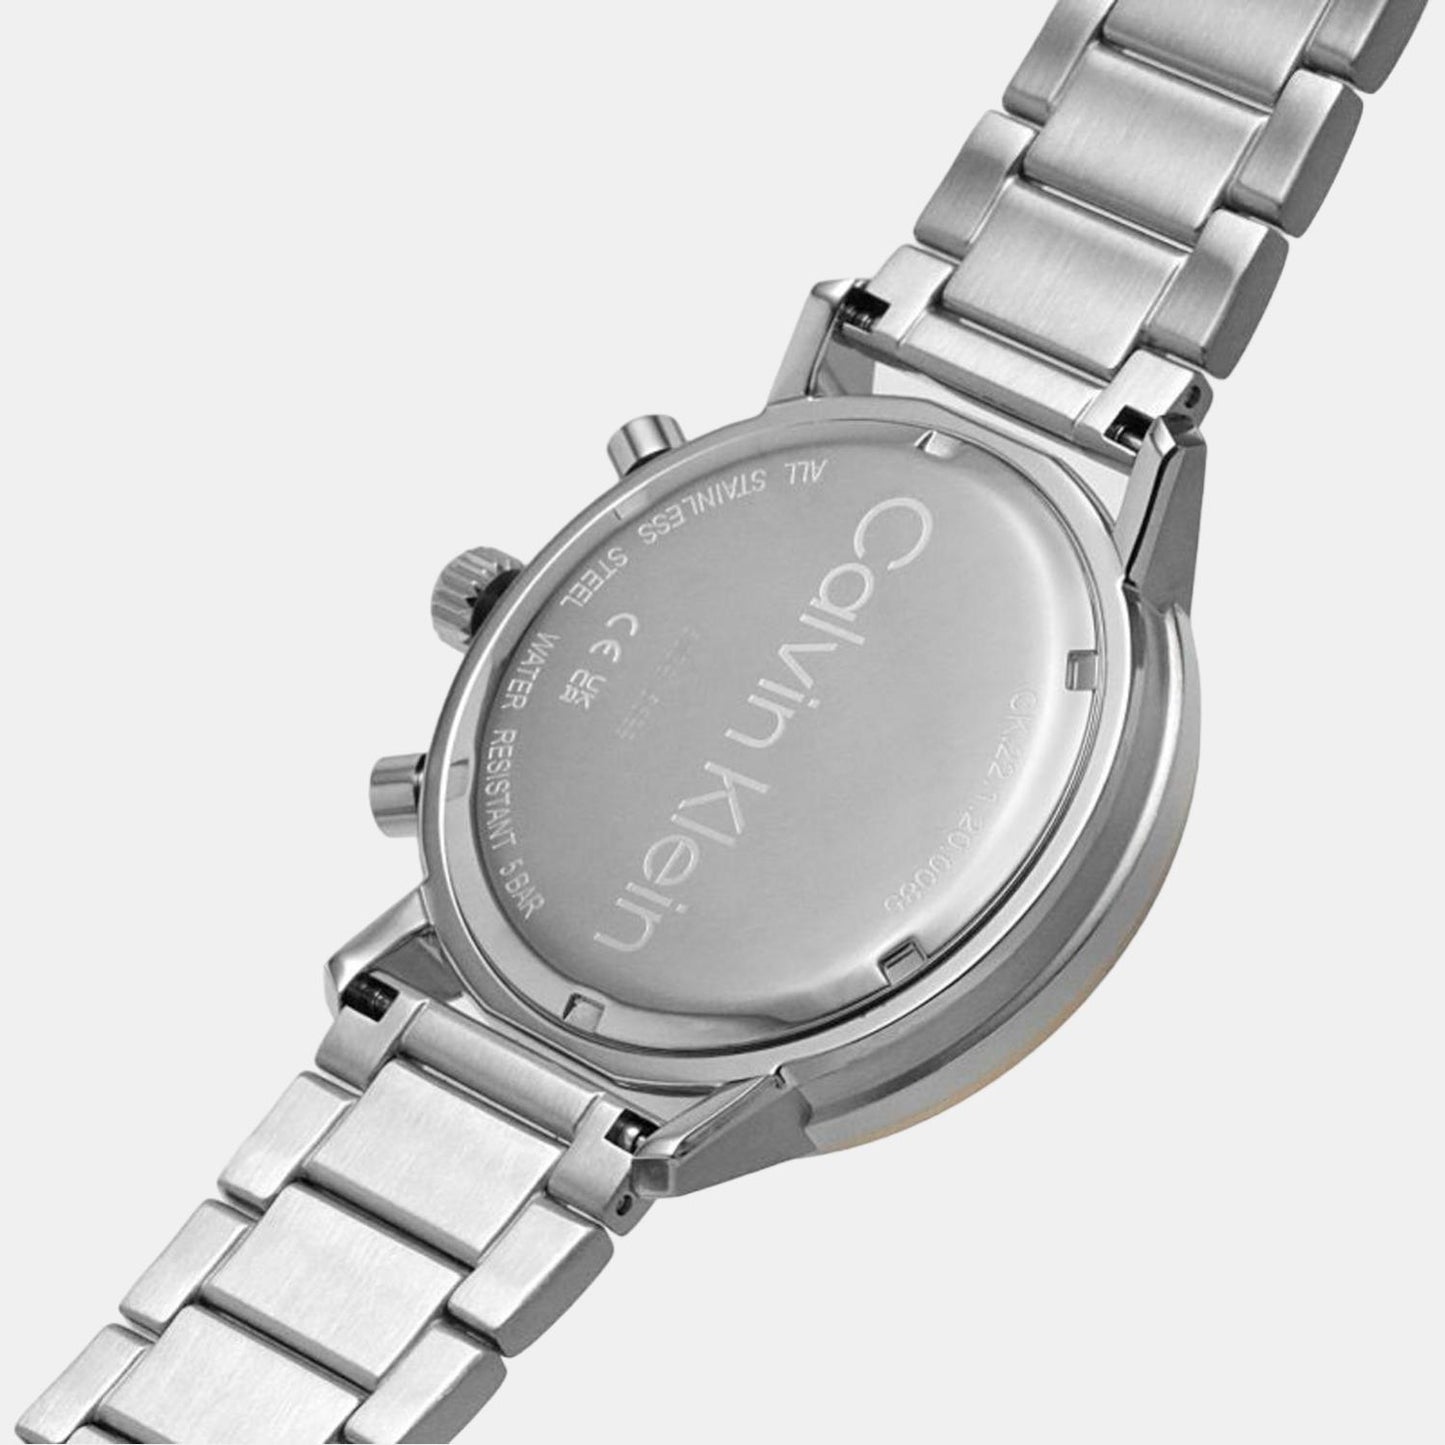 calvin-klein-stainless-steel-grey-analog-male-watch-25200064